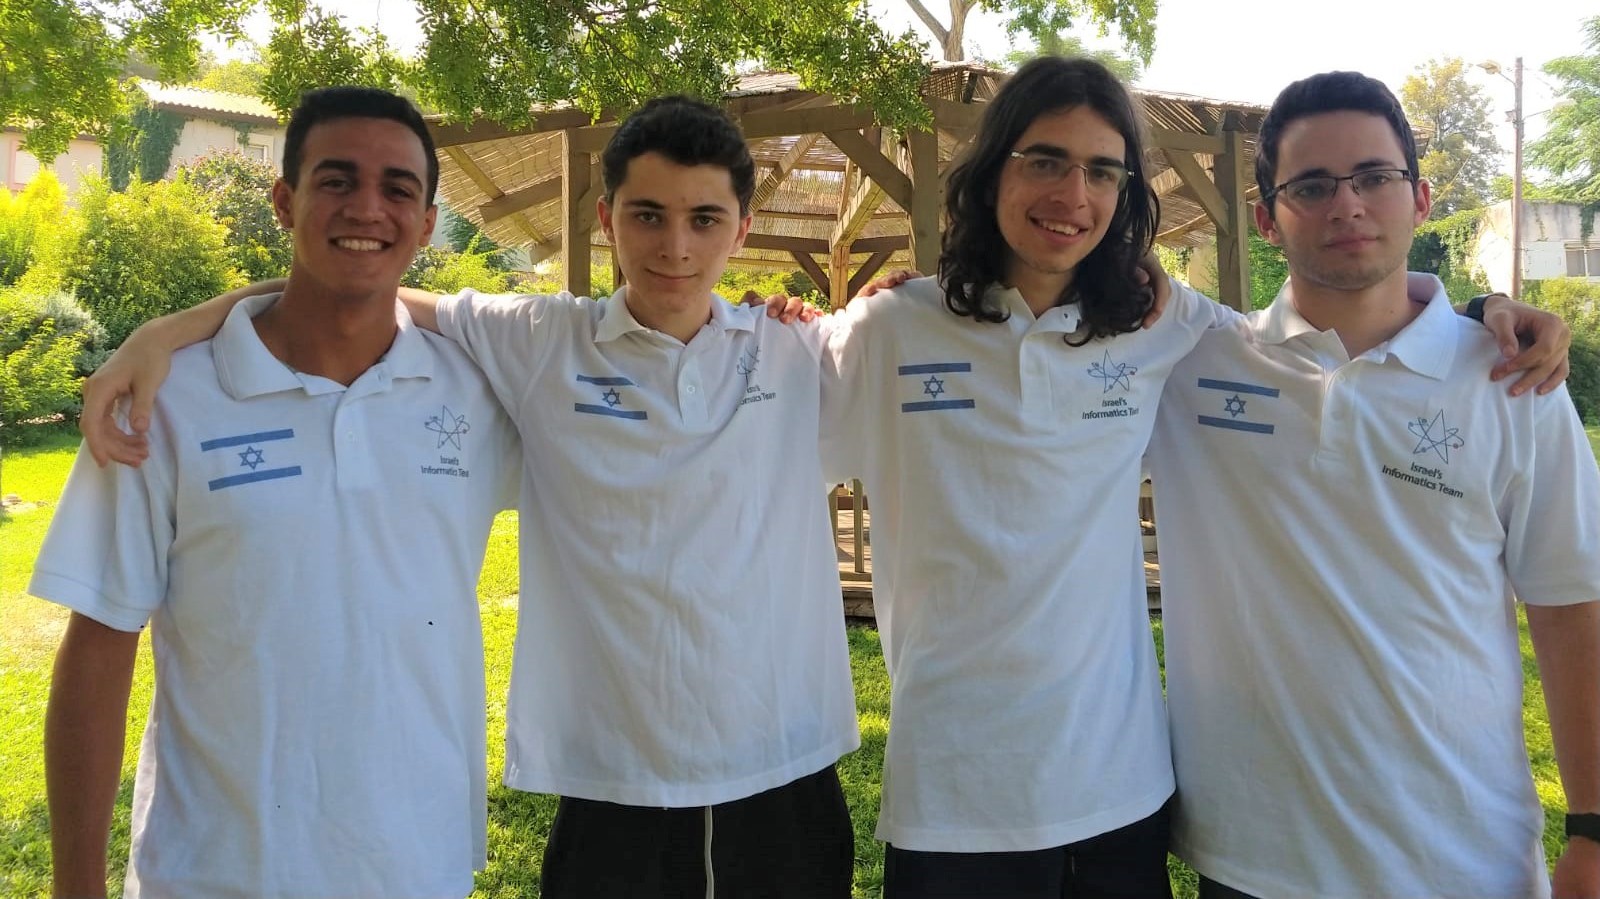 From left, International Olympiad in Informatics medalists Yanir Edri, Lior Yehezkely, Gonen Gazit, Yoav Katz. Photo courtesy of Future Scientists Center